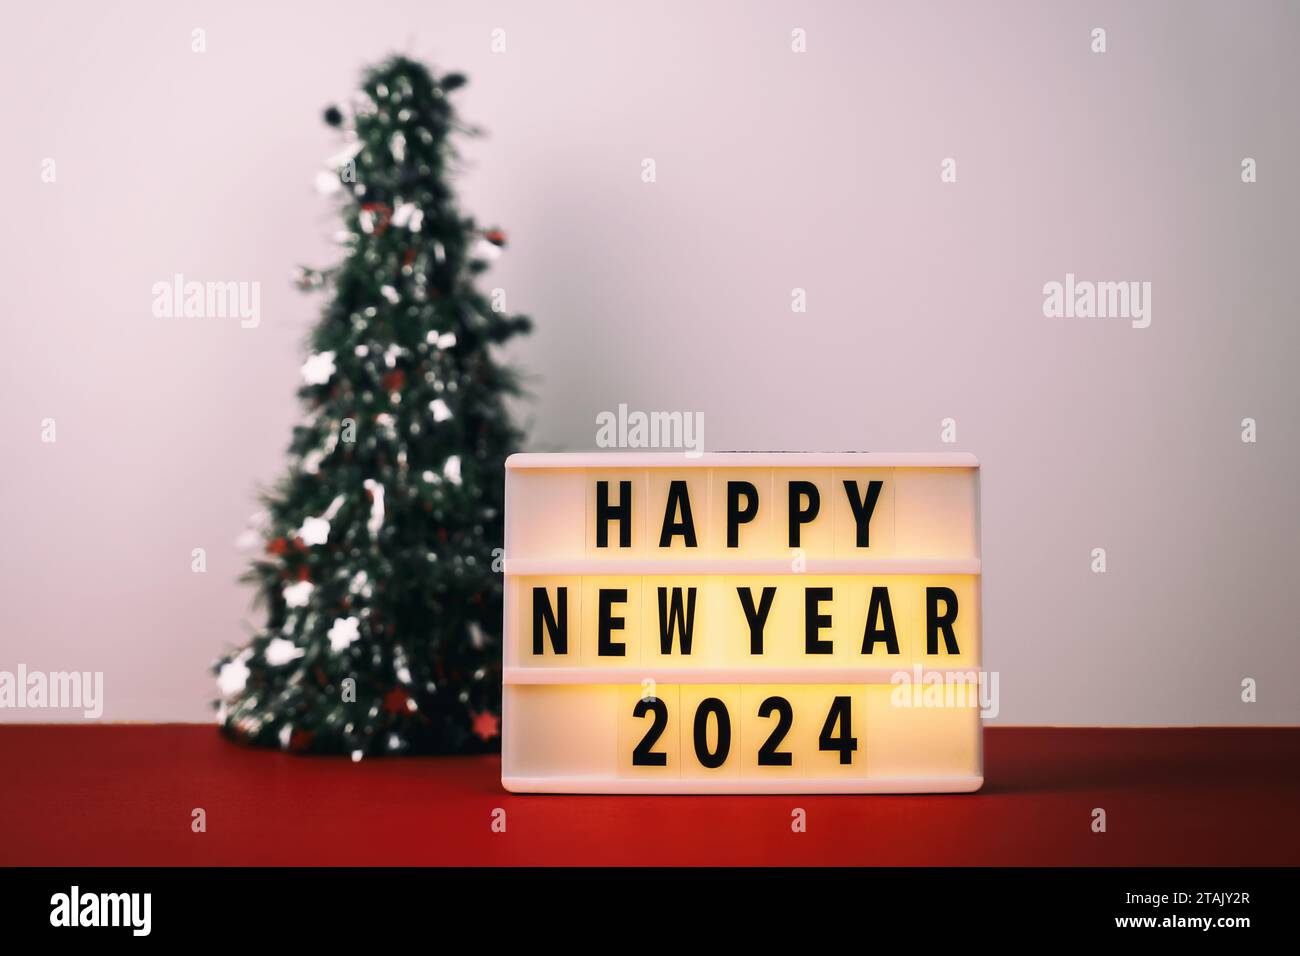 Happy New Year 2024 on Light box Stock Photo